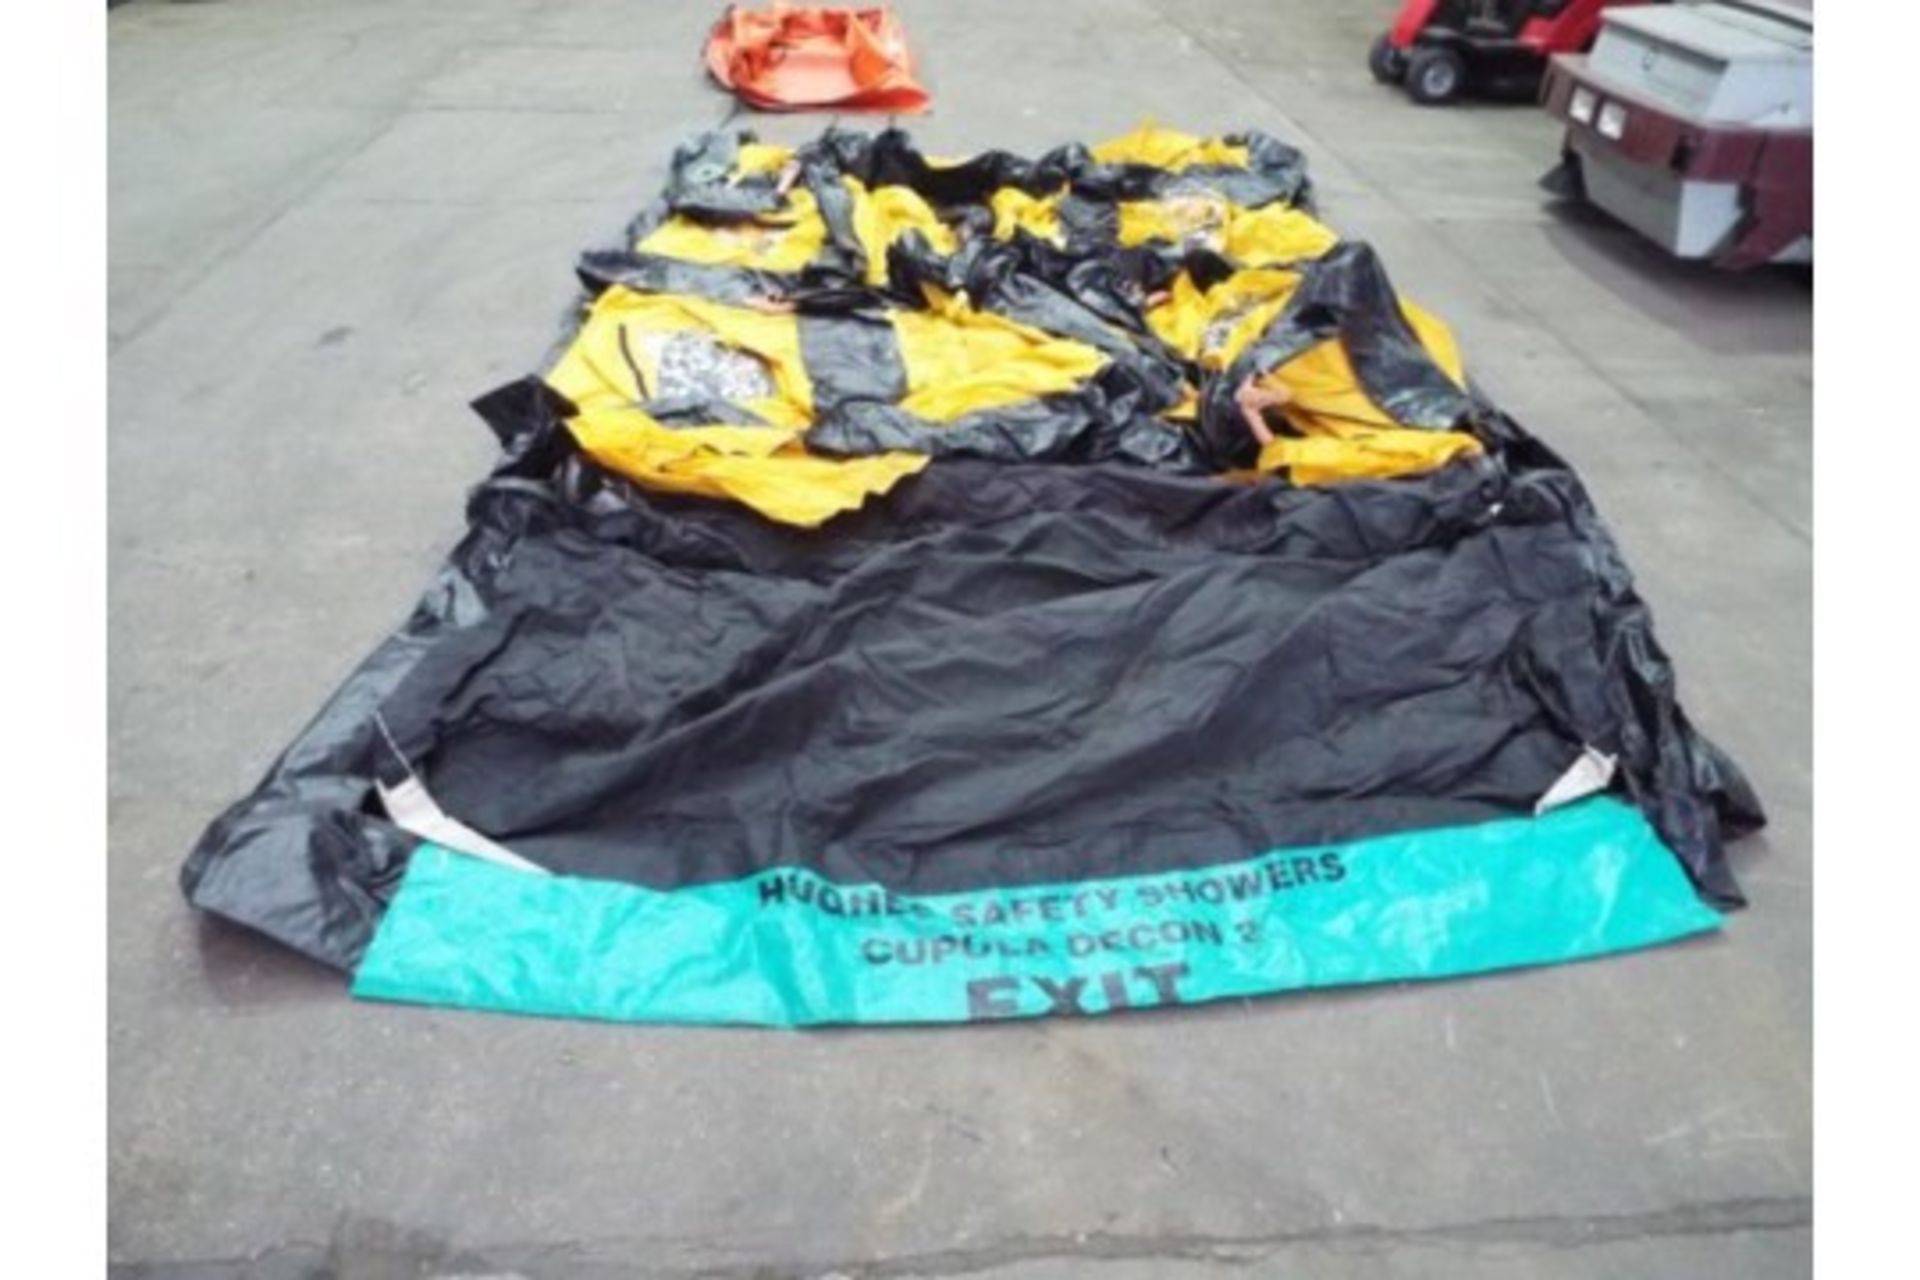 Hughes Decon 2 Inflatable Decontamination Shower Unit - Image 2 of 11